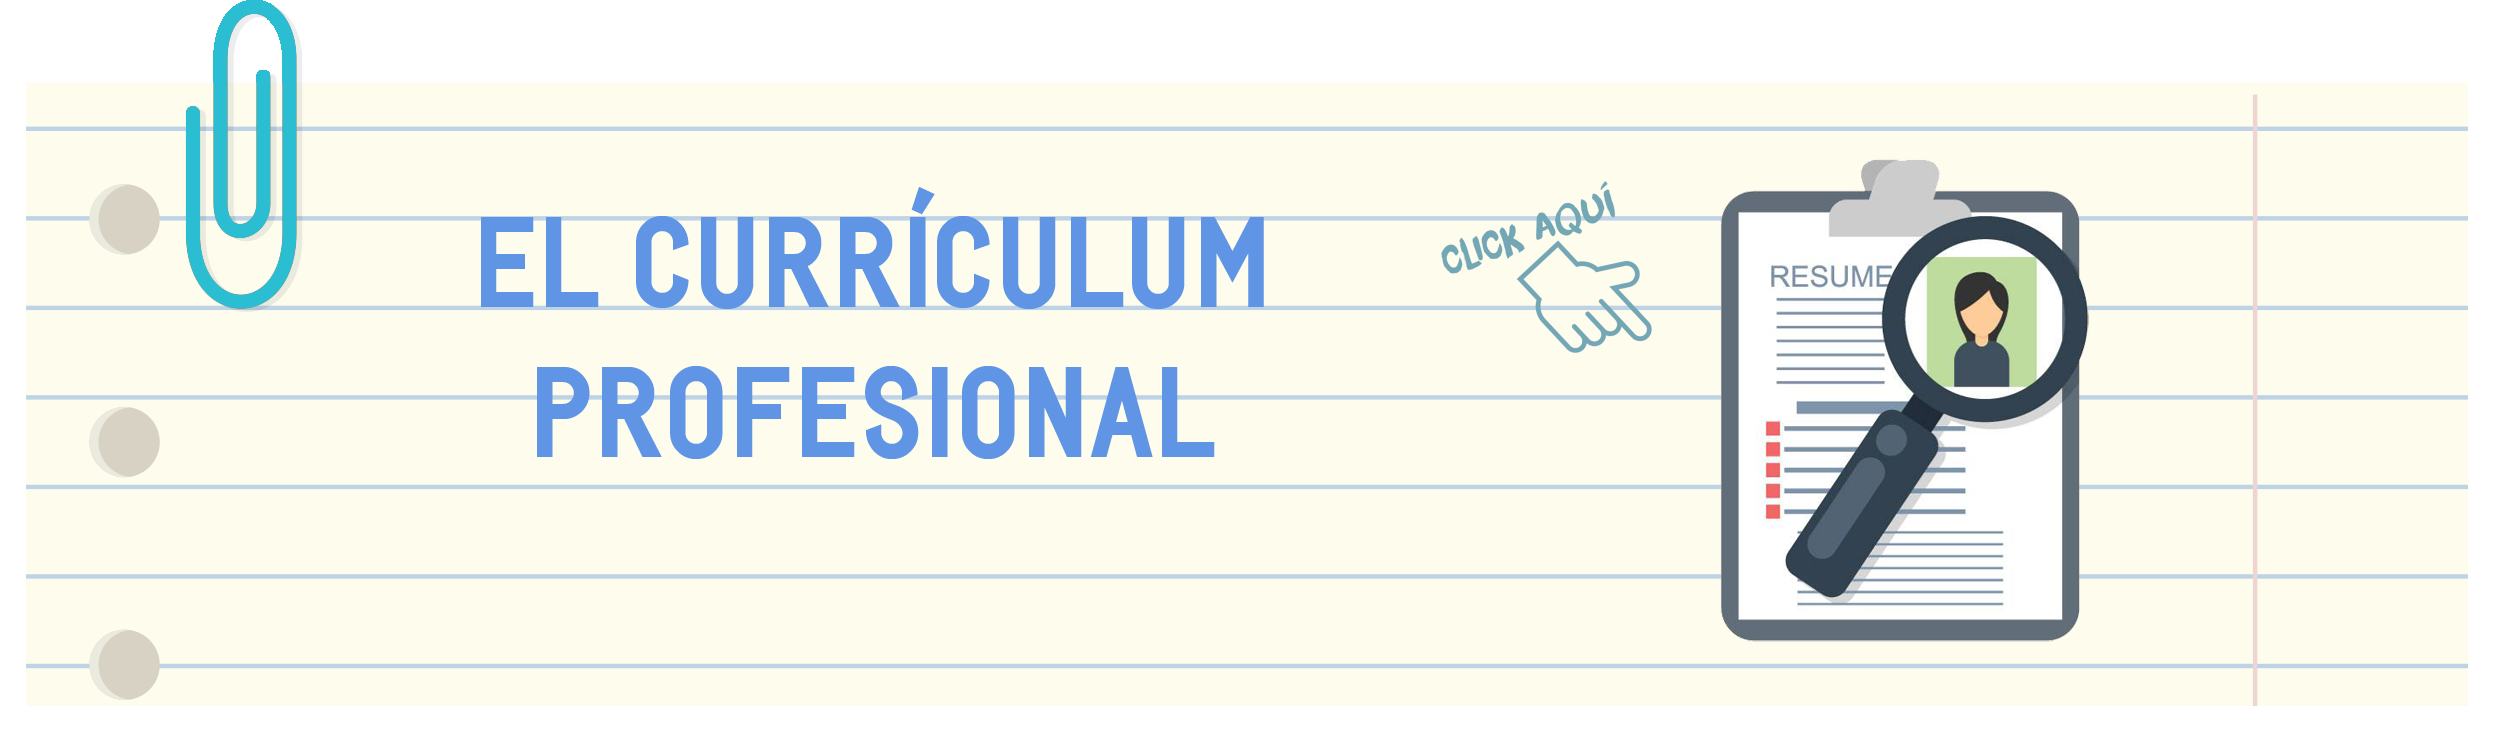 estructura_curriculum_profesional.png